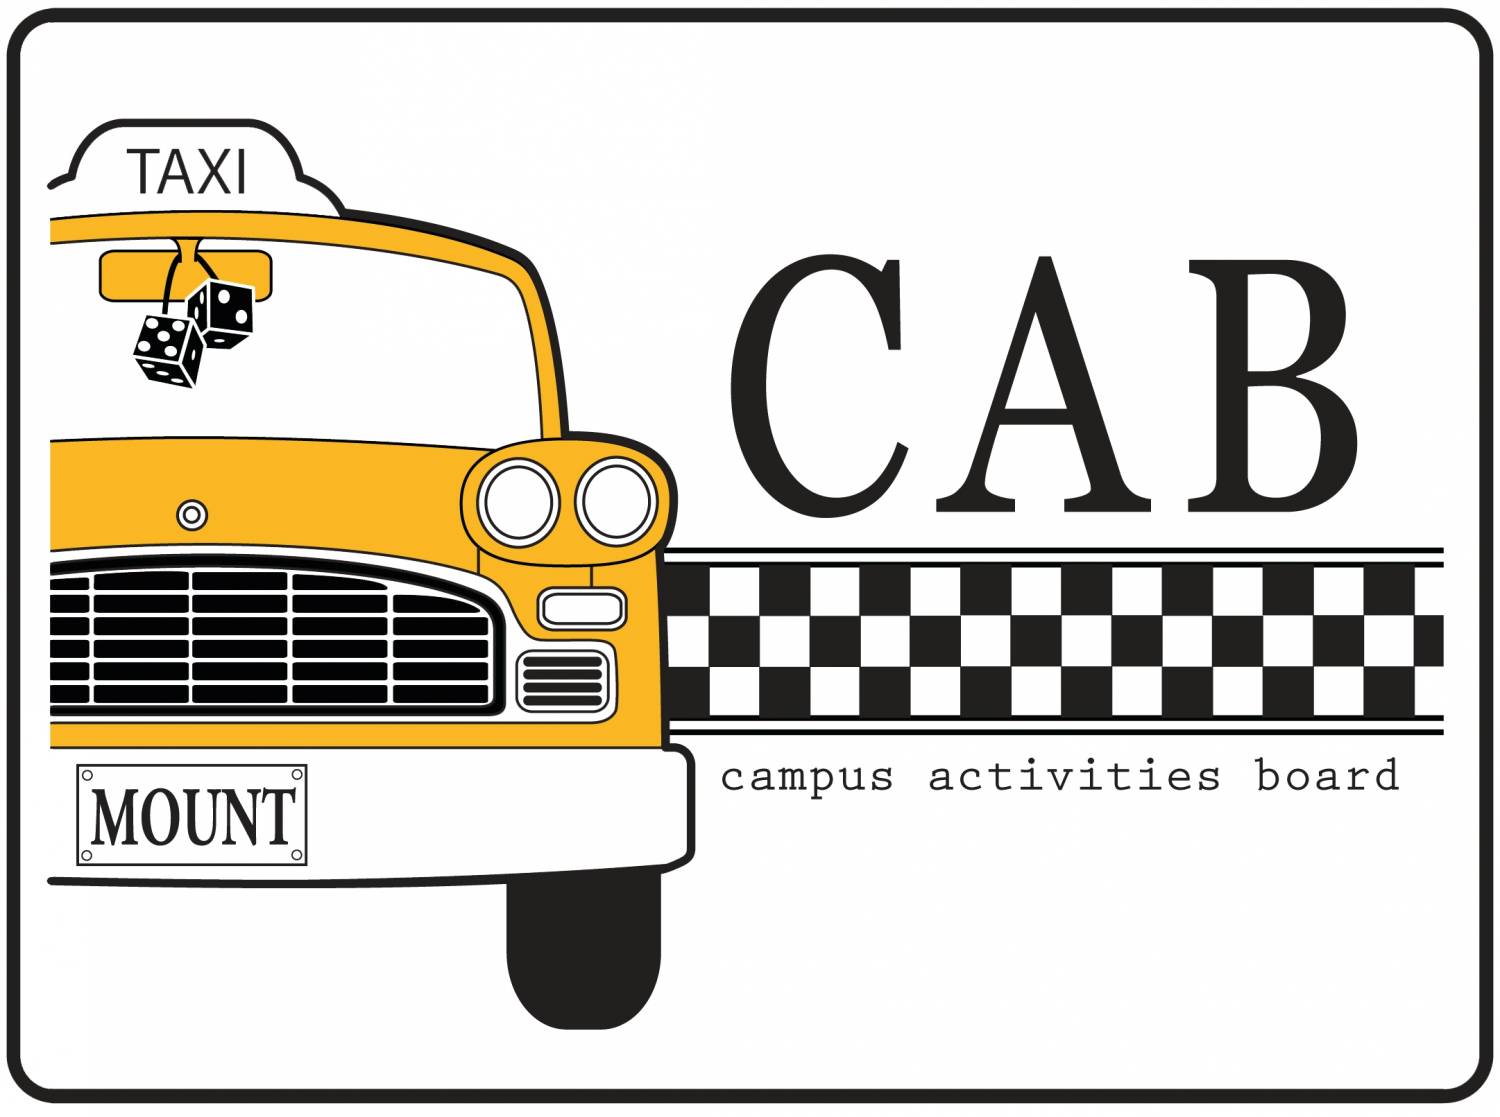 Логотип такси смешное